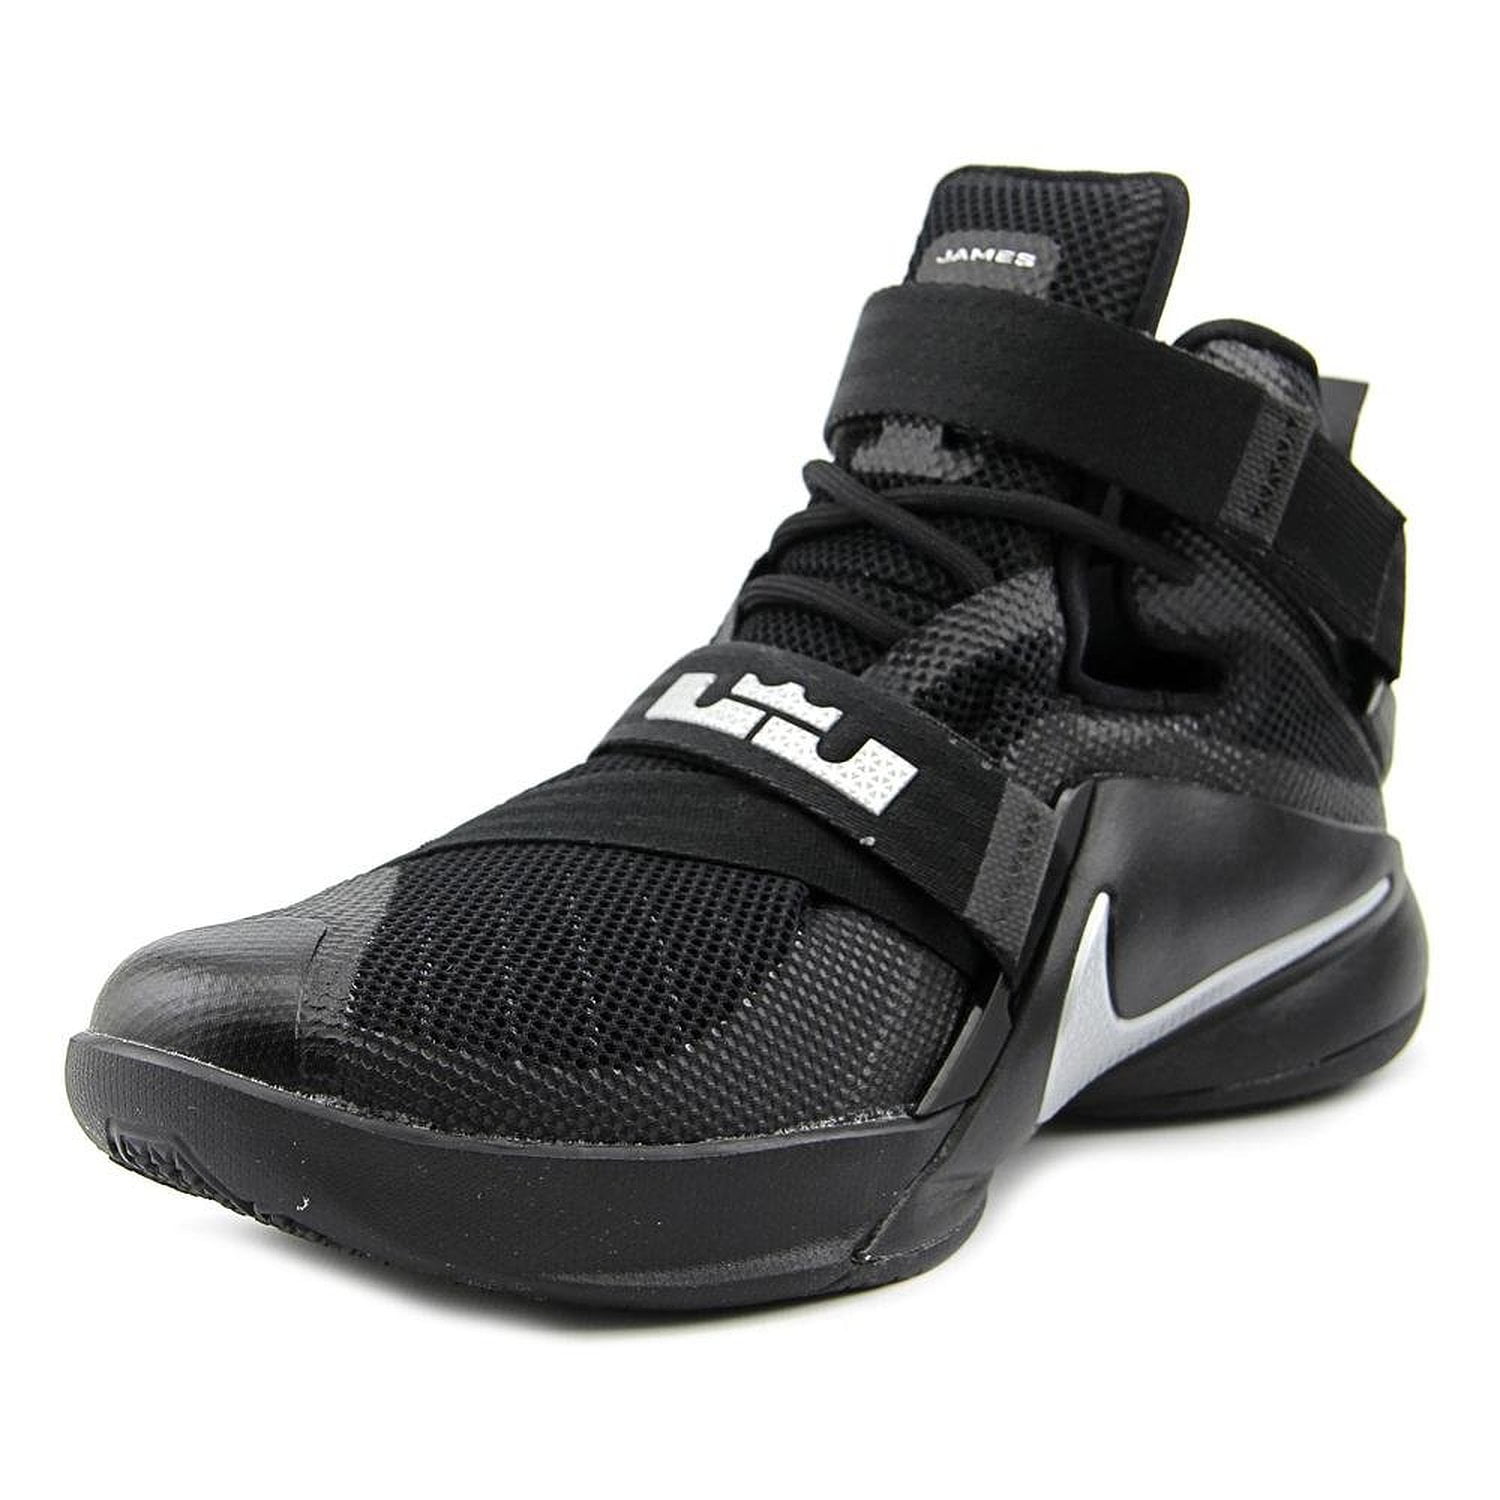 Río Paraná feo archivo Nike Lebron Soldier IX Mens Basketball Shoes Black/Silver - Walmart.com